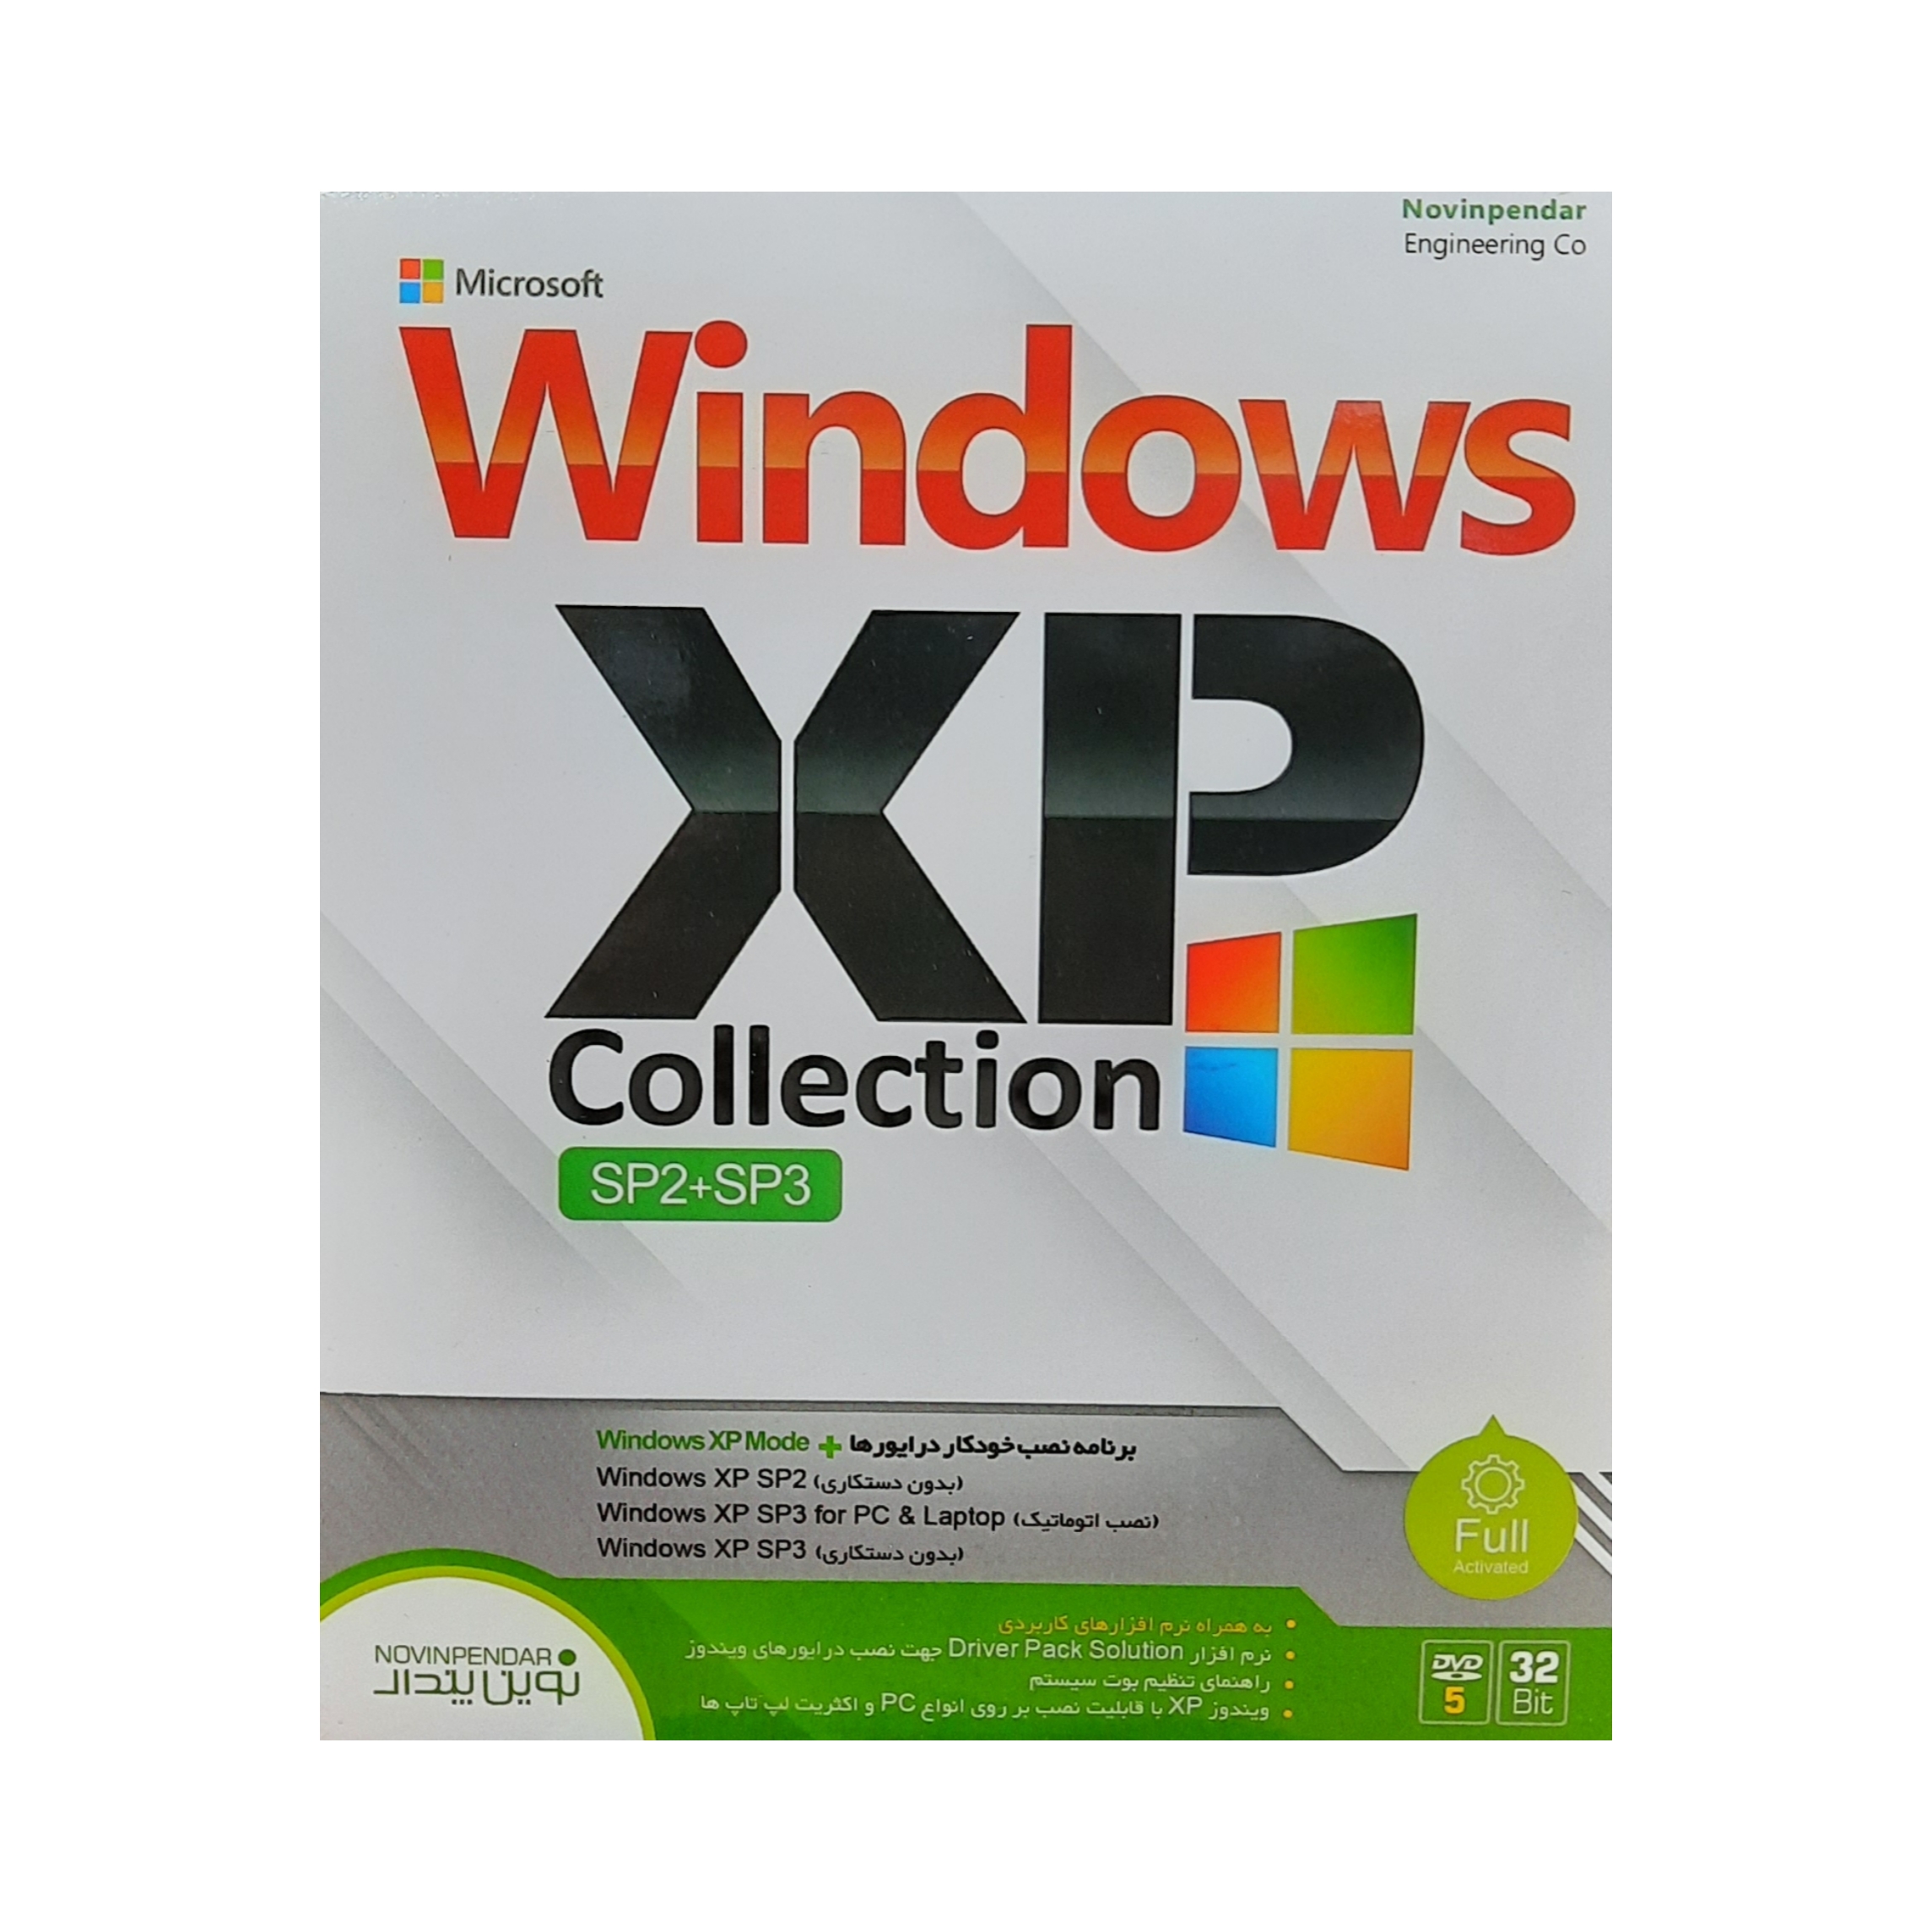 سیستم عامل Windows XP Collection Sp2,Sp3 نشر نوین پندار